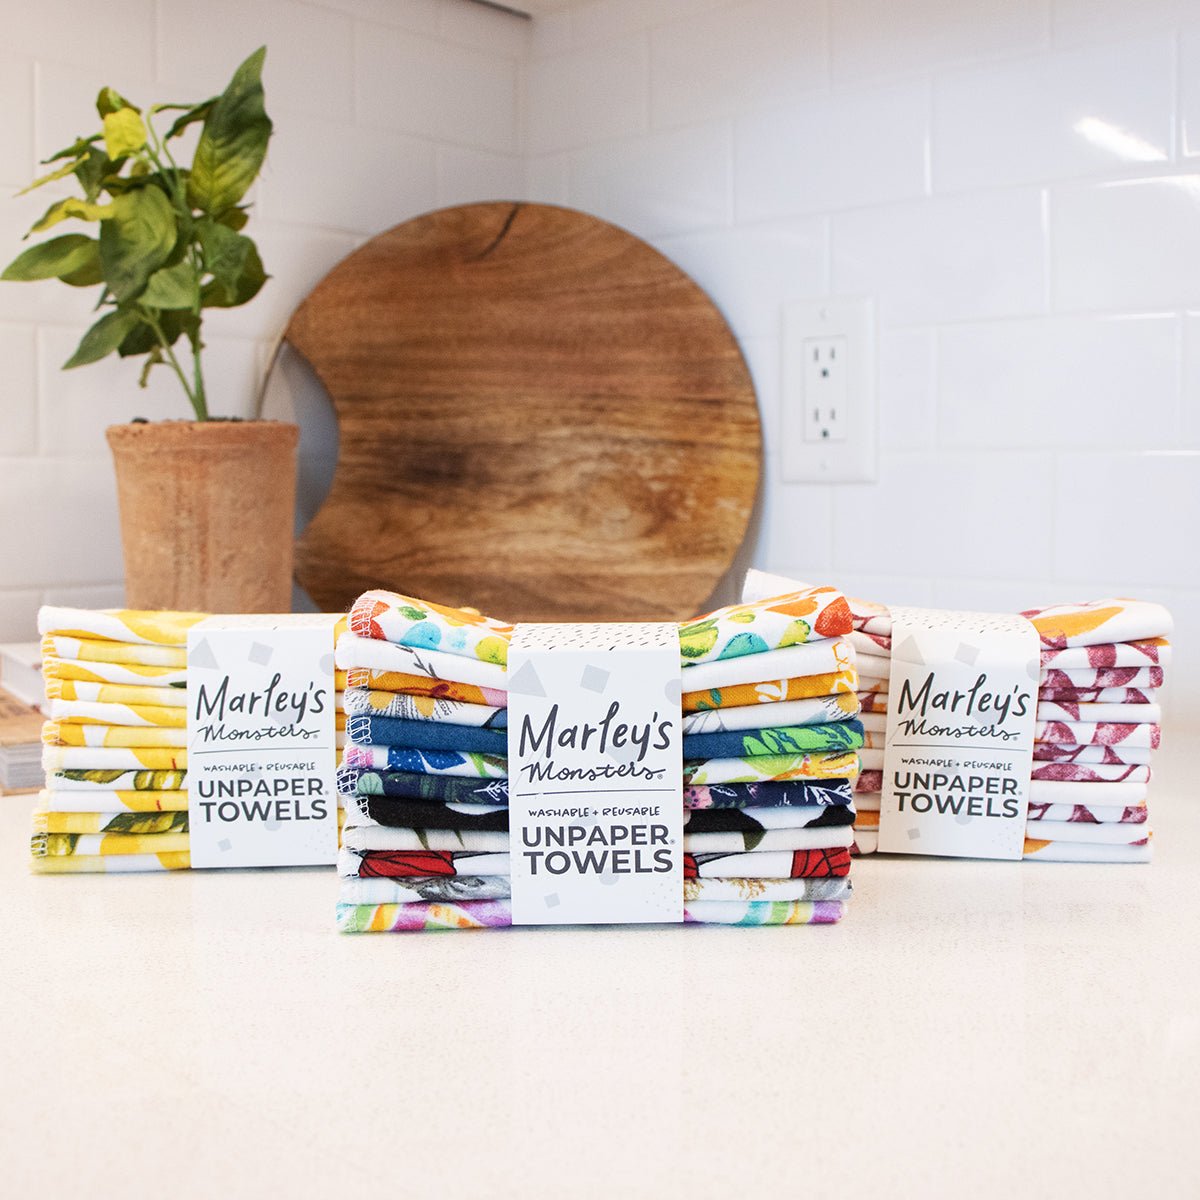 Marley's Monsters Organic Unpaper Towels - 12 Pack - White